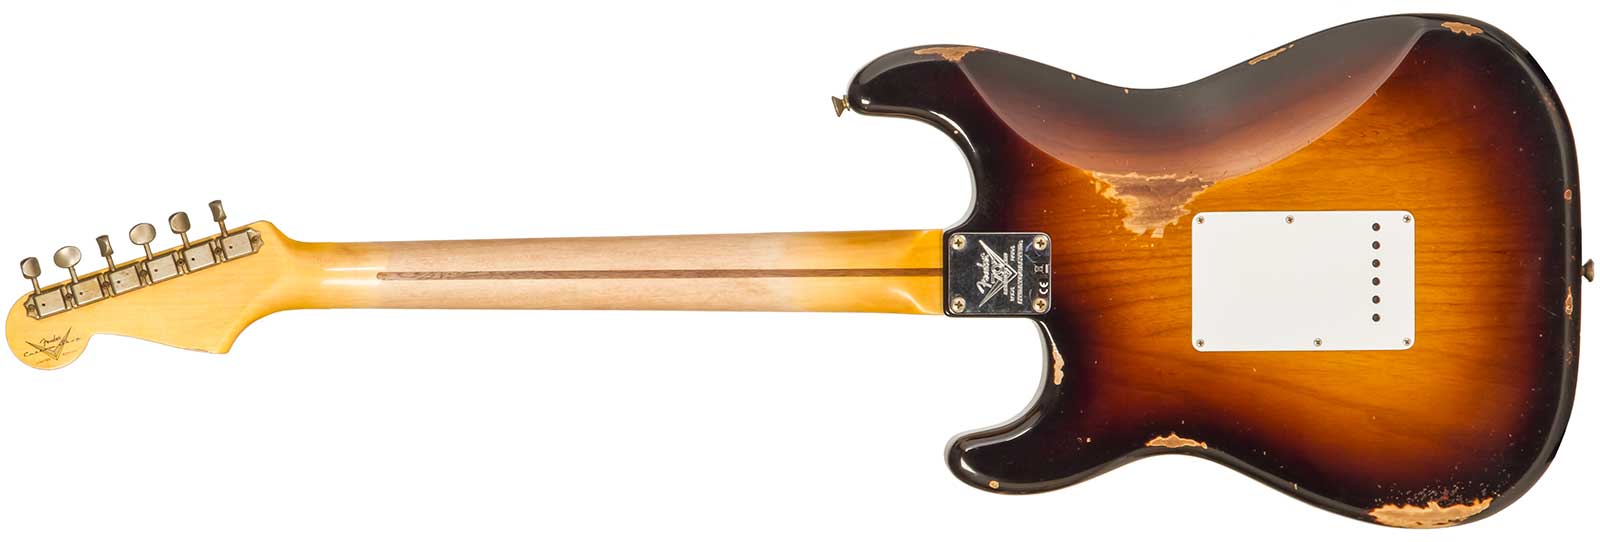 Fender Custom Shop Strat 1954 70th Anniv. 3s Trem Mn #xn4316 - Relic Wide Fade 2-color Sunburst - Elektrische gitaar in Str-vorm - Variation 1